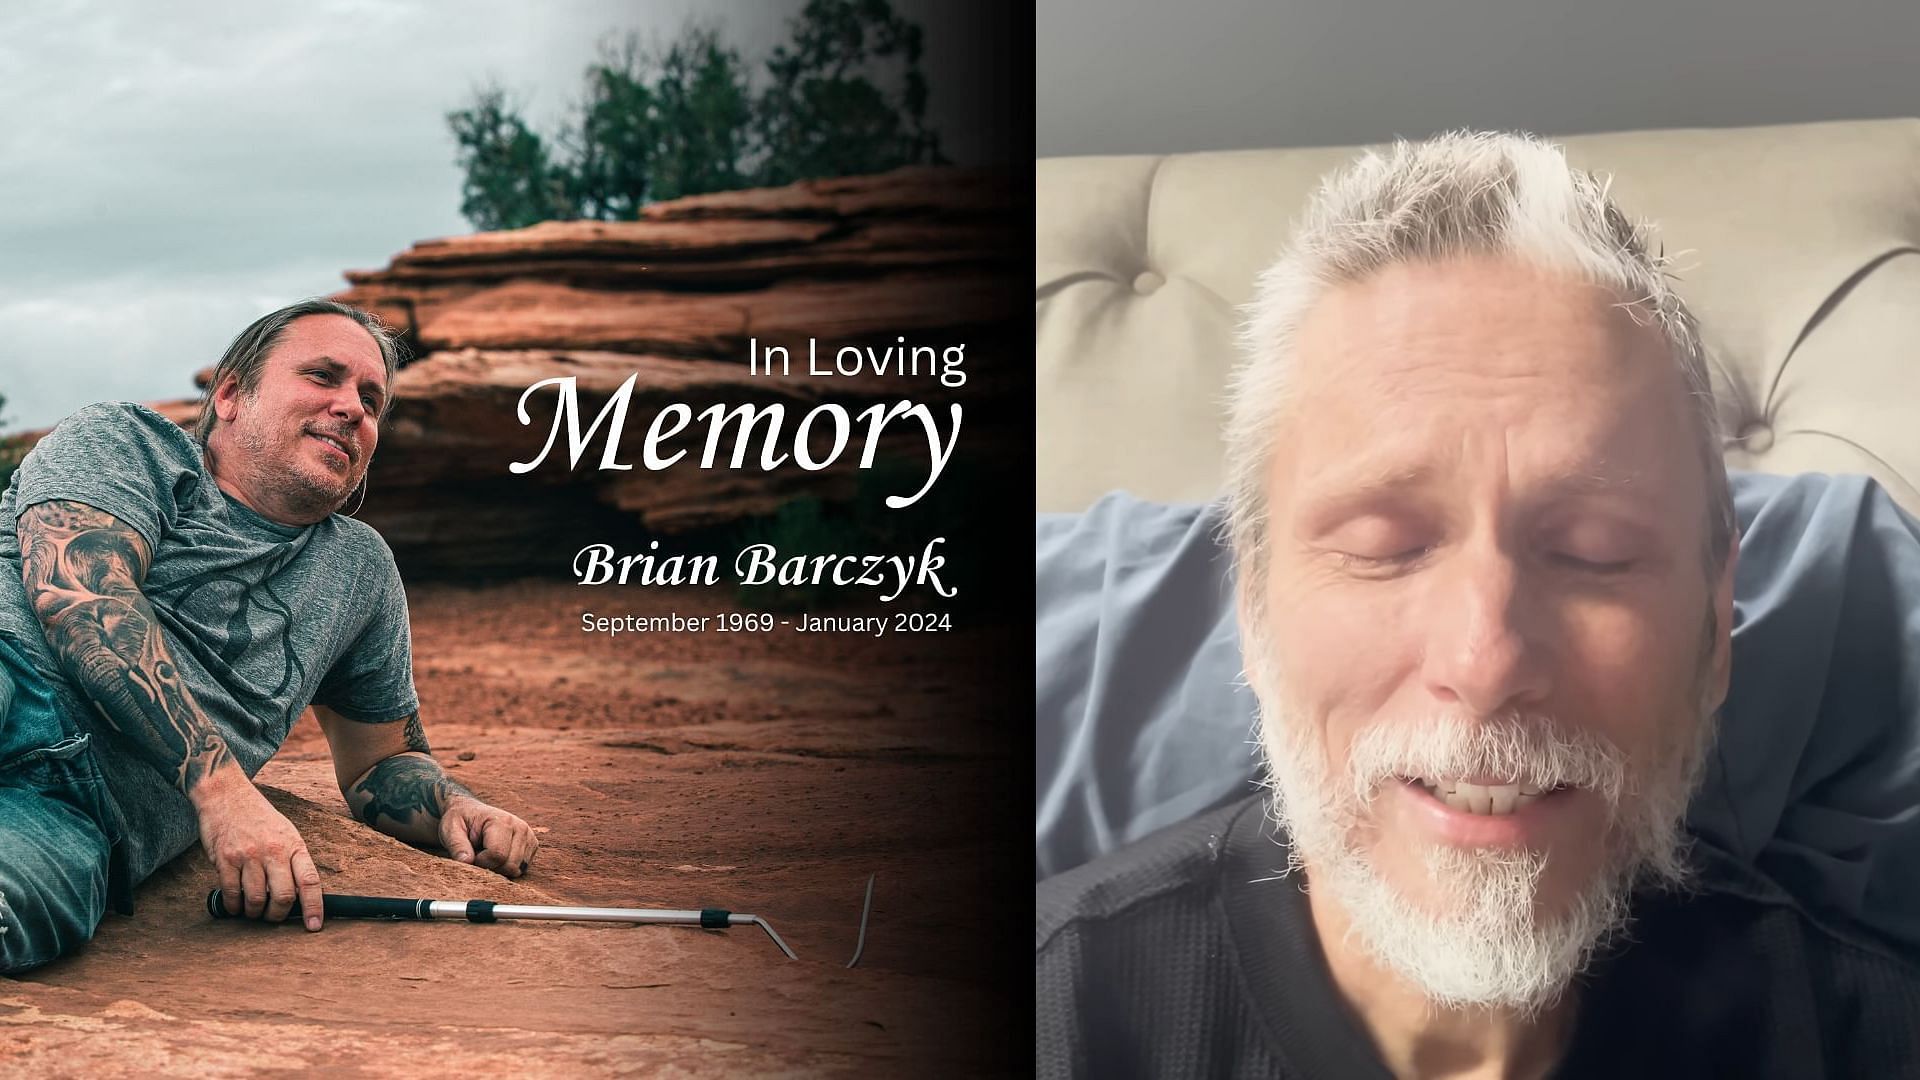 Brian Barczyk passes away at 54 (Image via snakebytestv/Instagram, Brian Barczyk/YouTube)